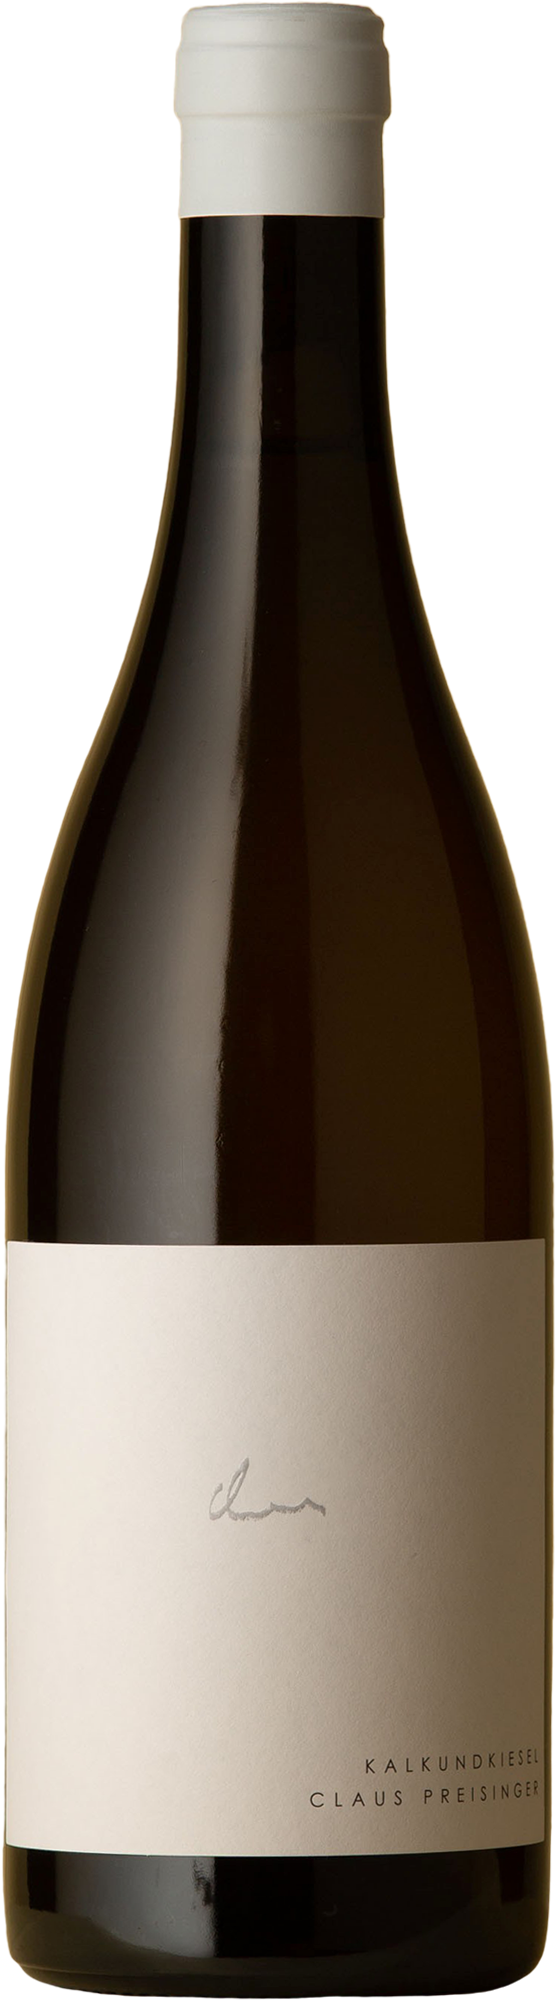 Claus Preisinger - Kalkundkiesel Blanc 2018 White Wine